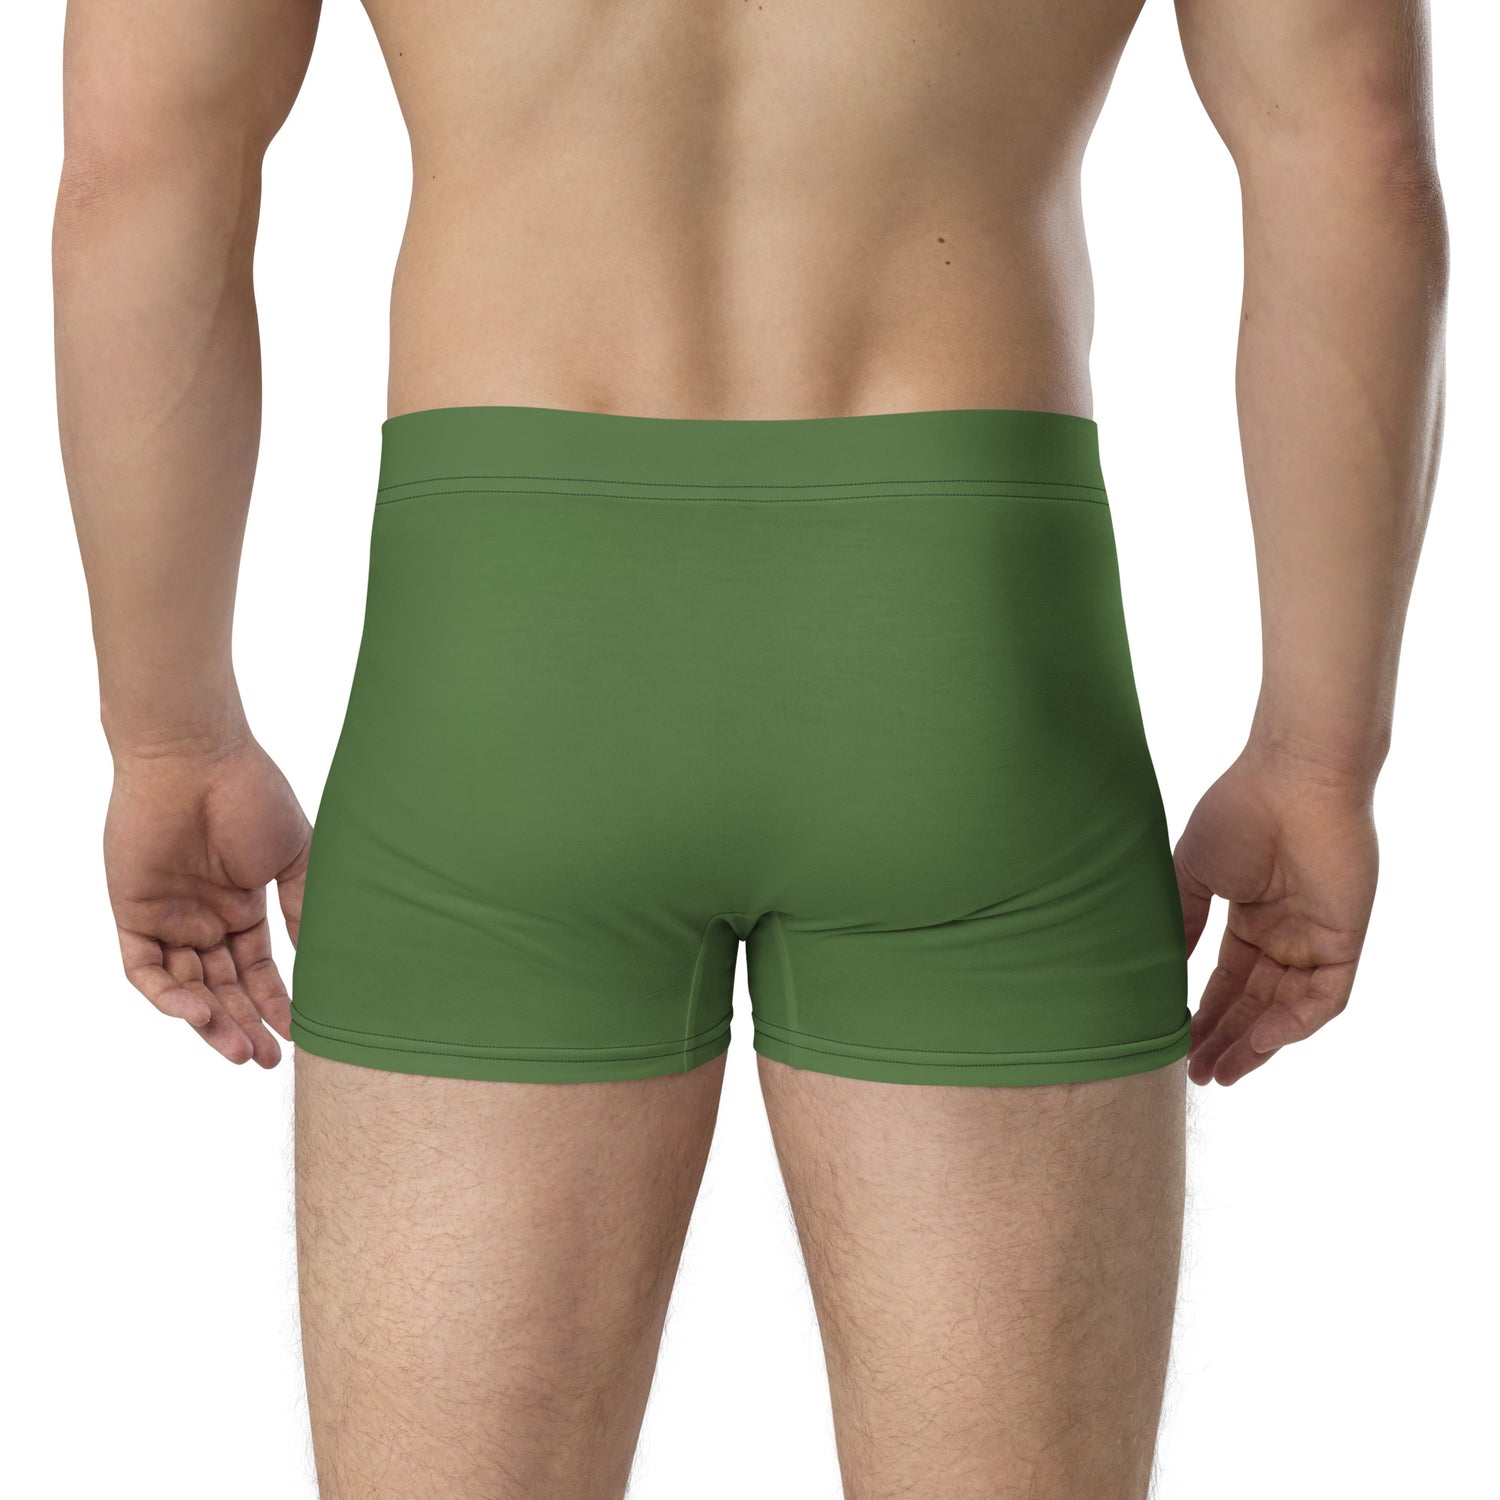 Army green open back cutout bulge enhancing brief size XL